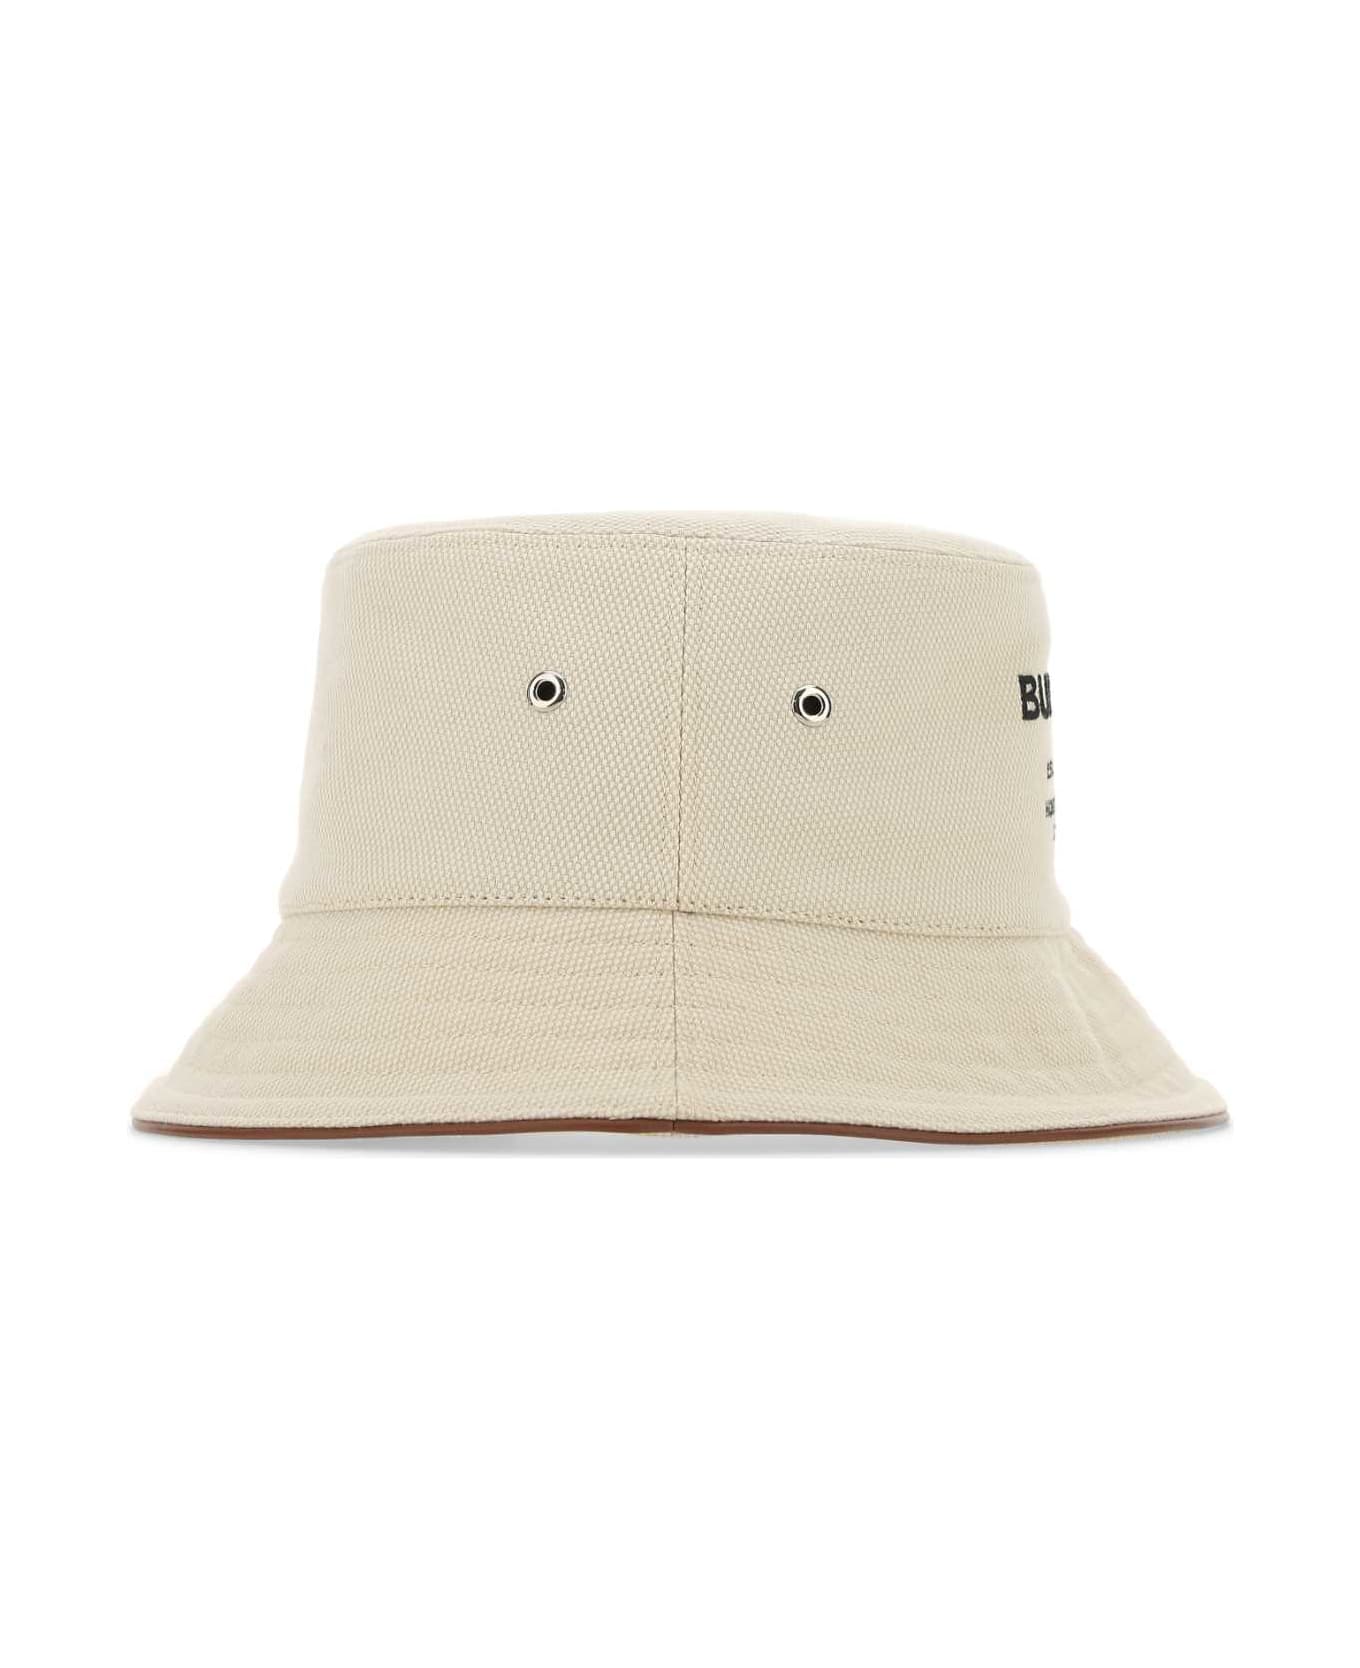 Burberry Sand Cotton Hat - A1395